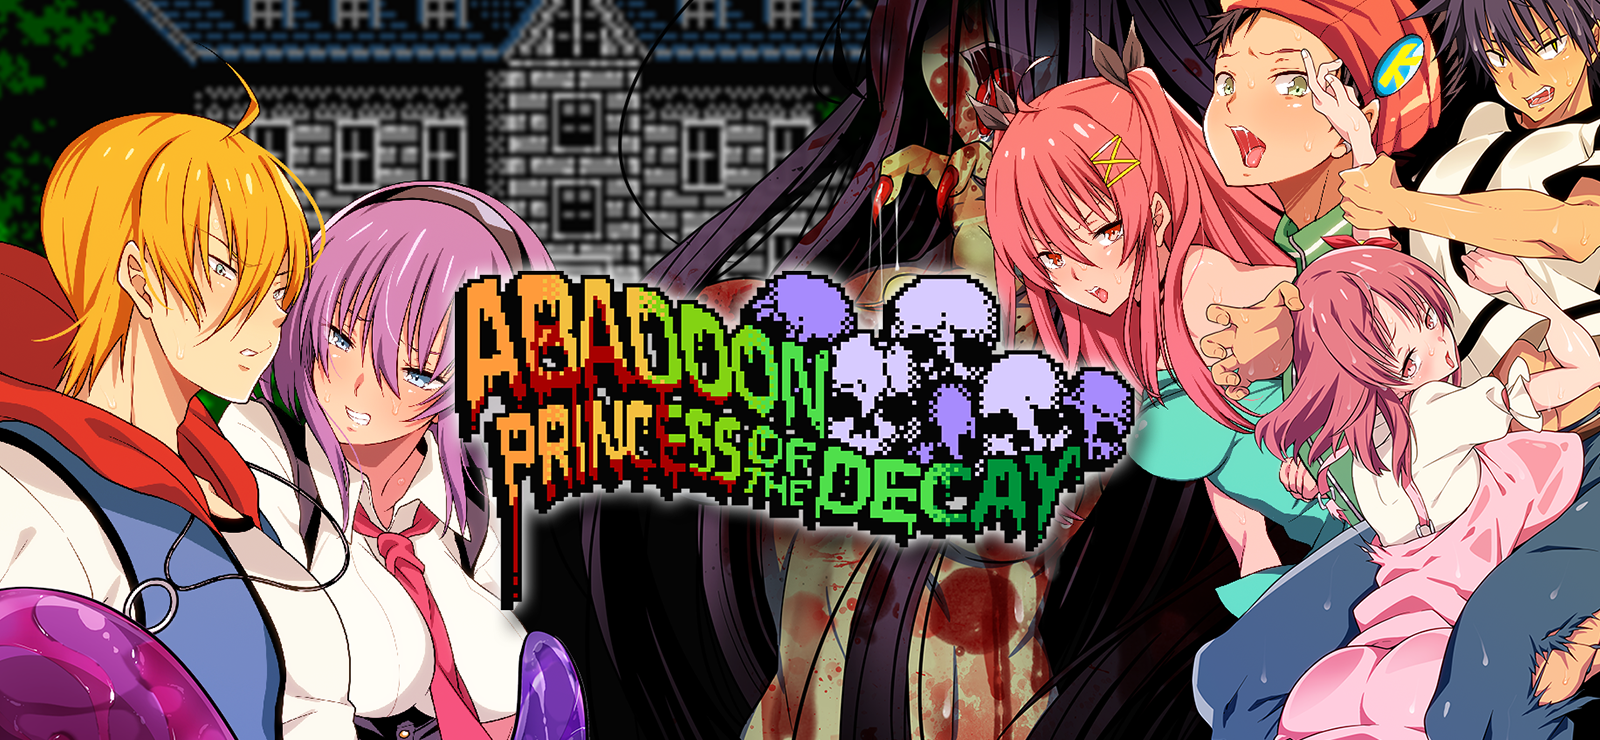 Abaddon: Princess Of The Decay